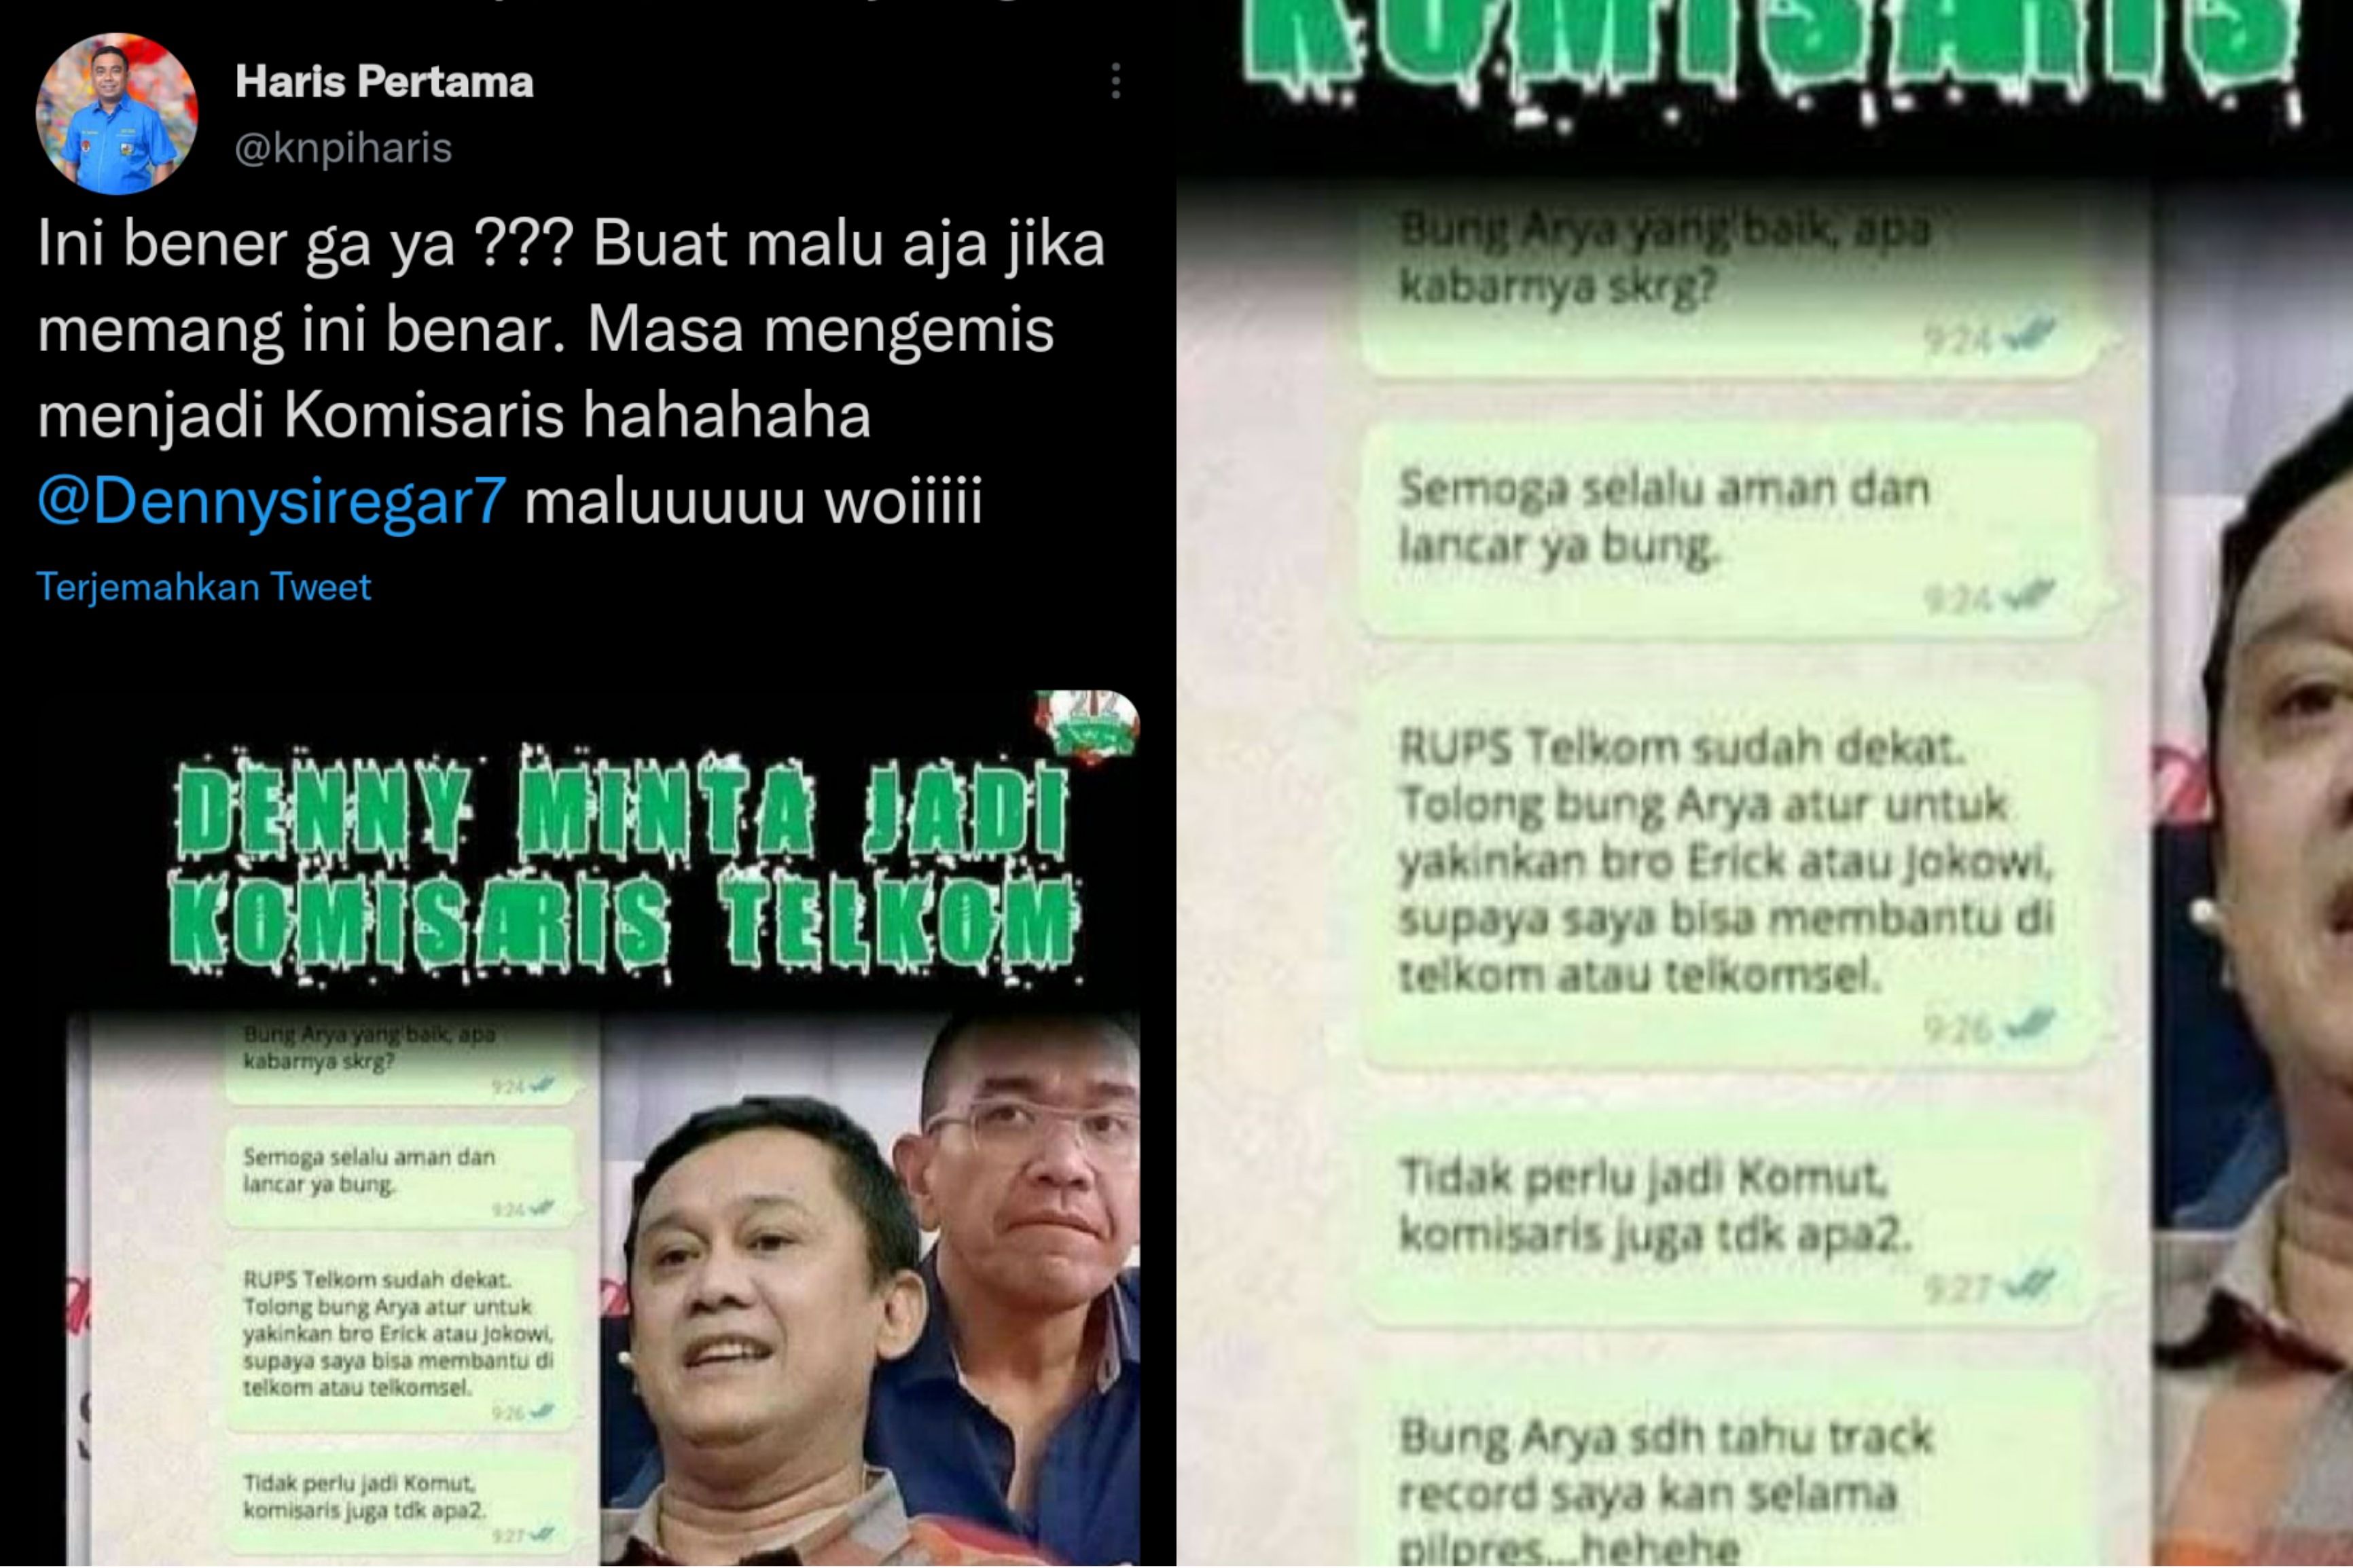 Haris Pertama menanggapi beredarnya foto tangkap layar yang menampilkan Denny Siregar yang diduga minta jabatan Komisaris PT Telkom